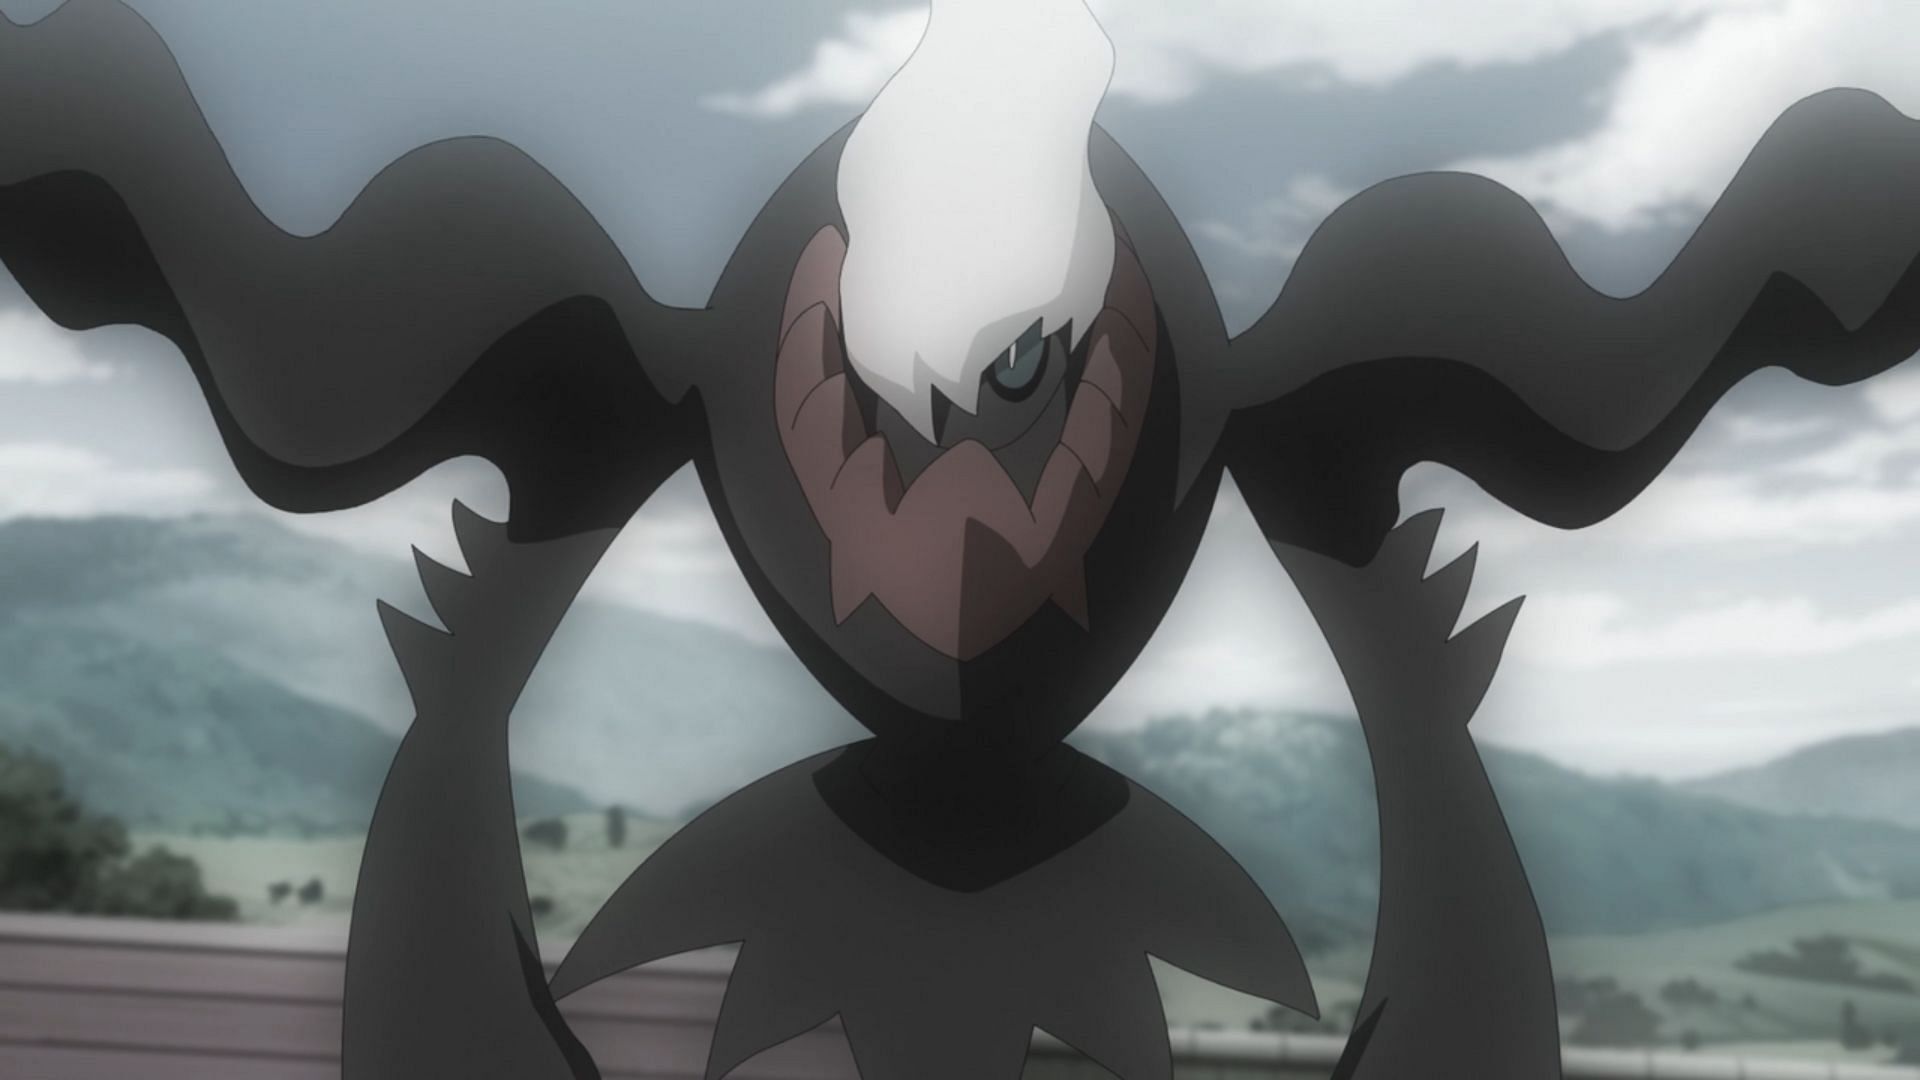 Darkrai in the anime (Image via The Pokemon Company)